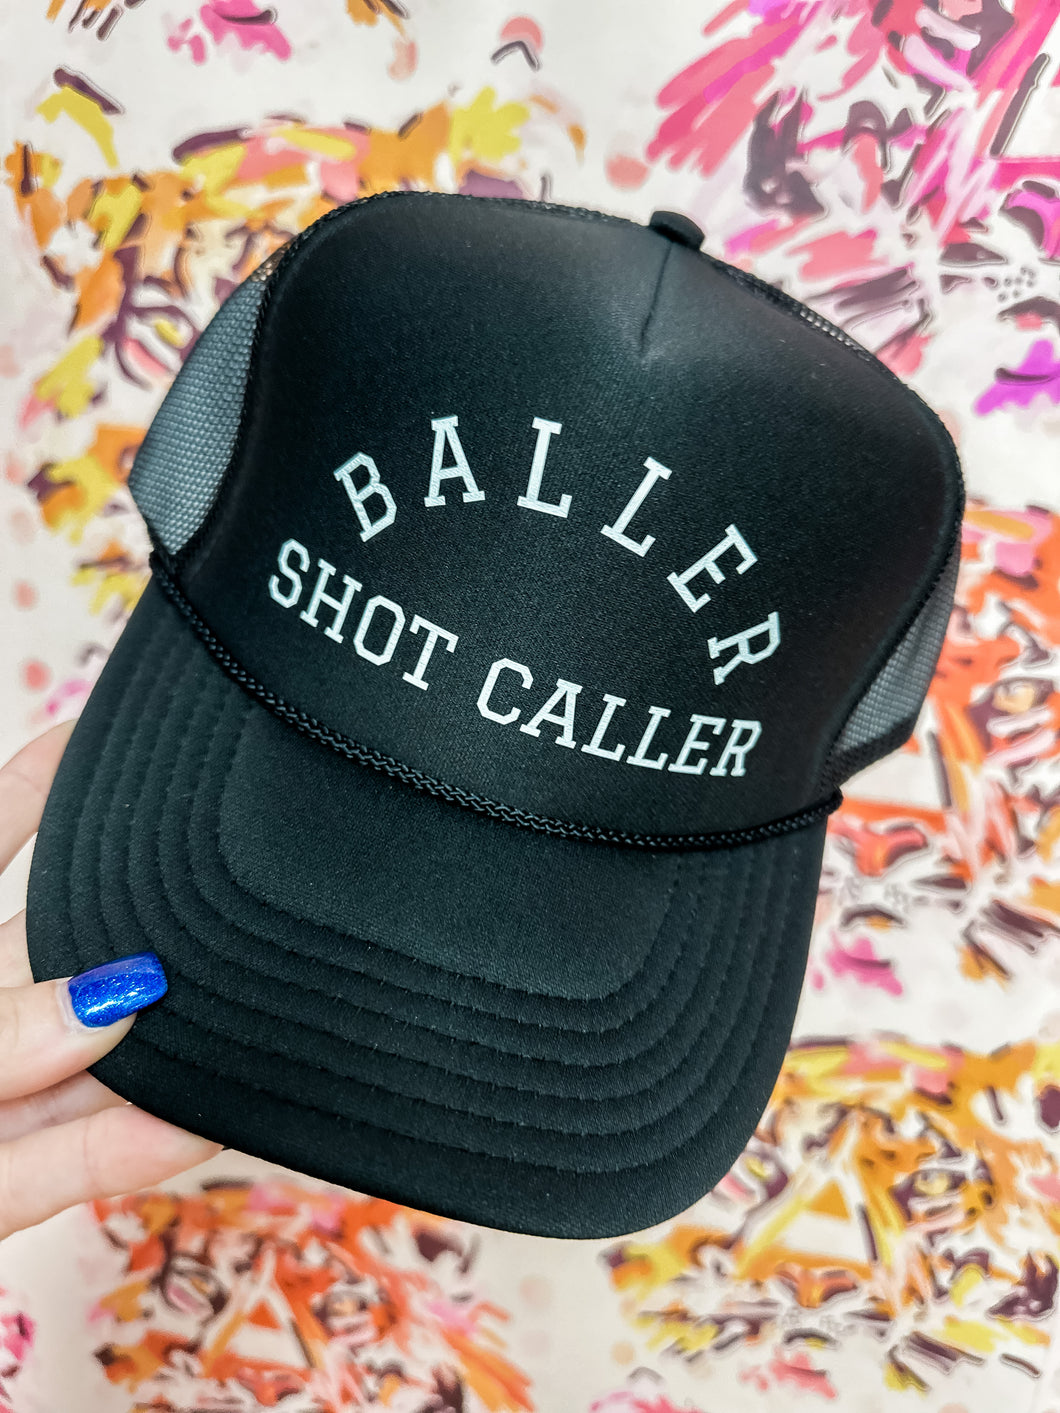 Baller Shot Caller Trucker Hat